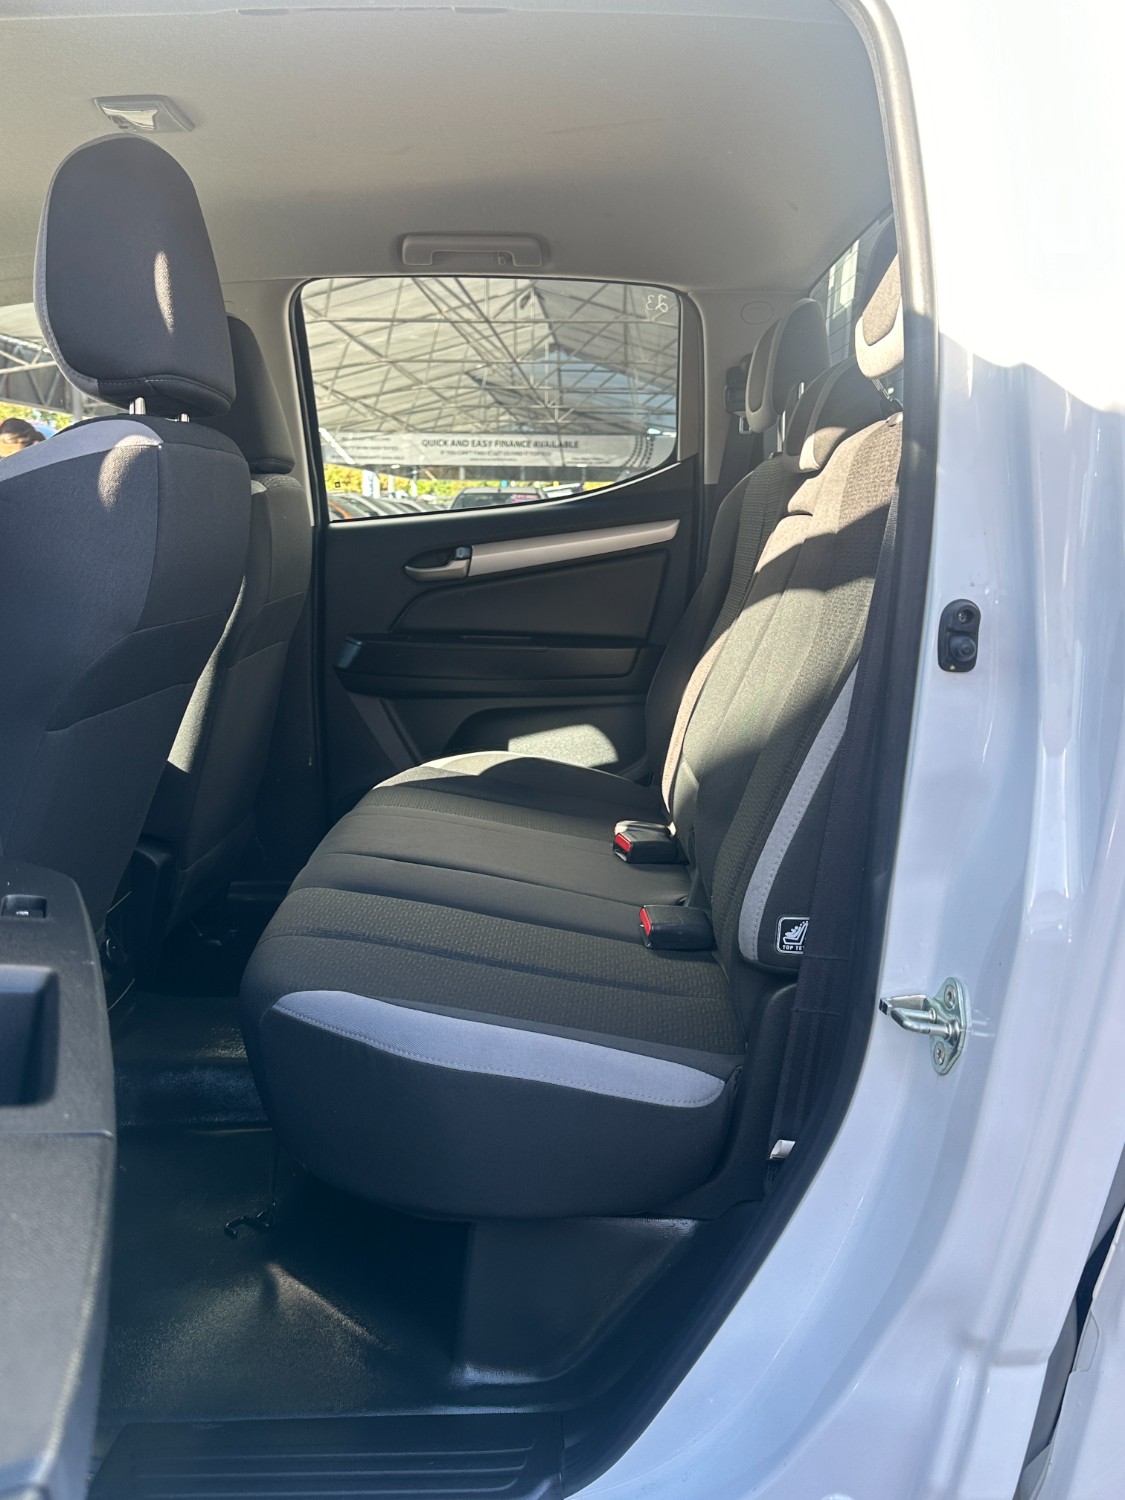 2019 Holden Colorado LS Ute Image 10